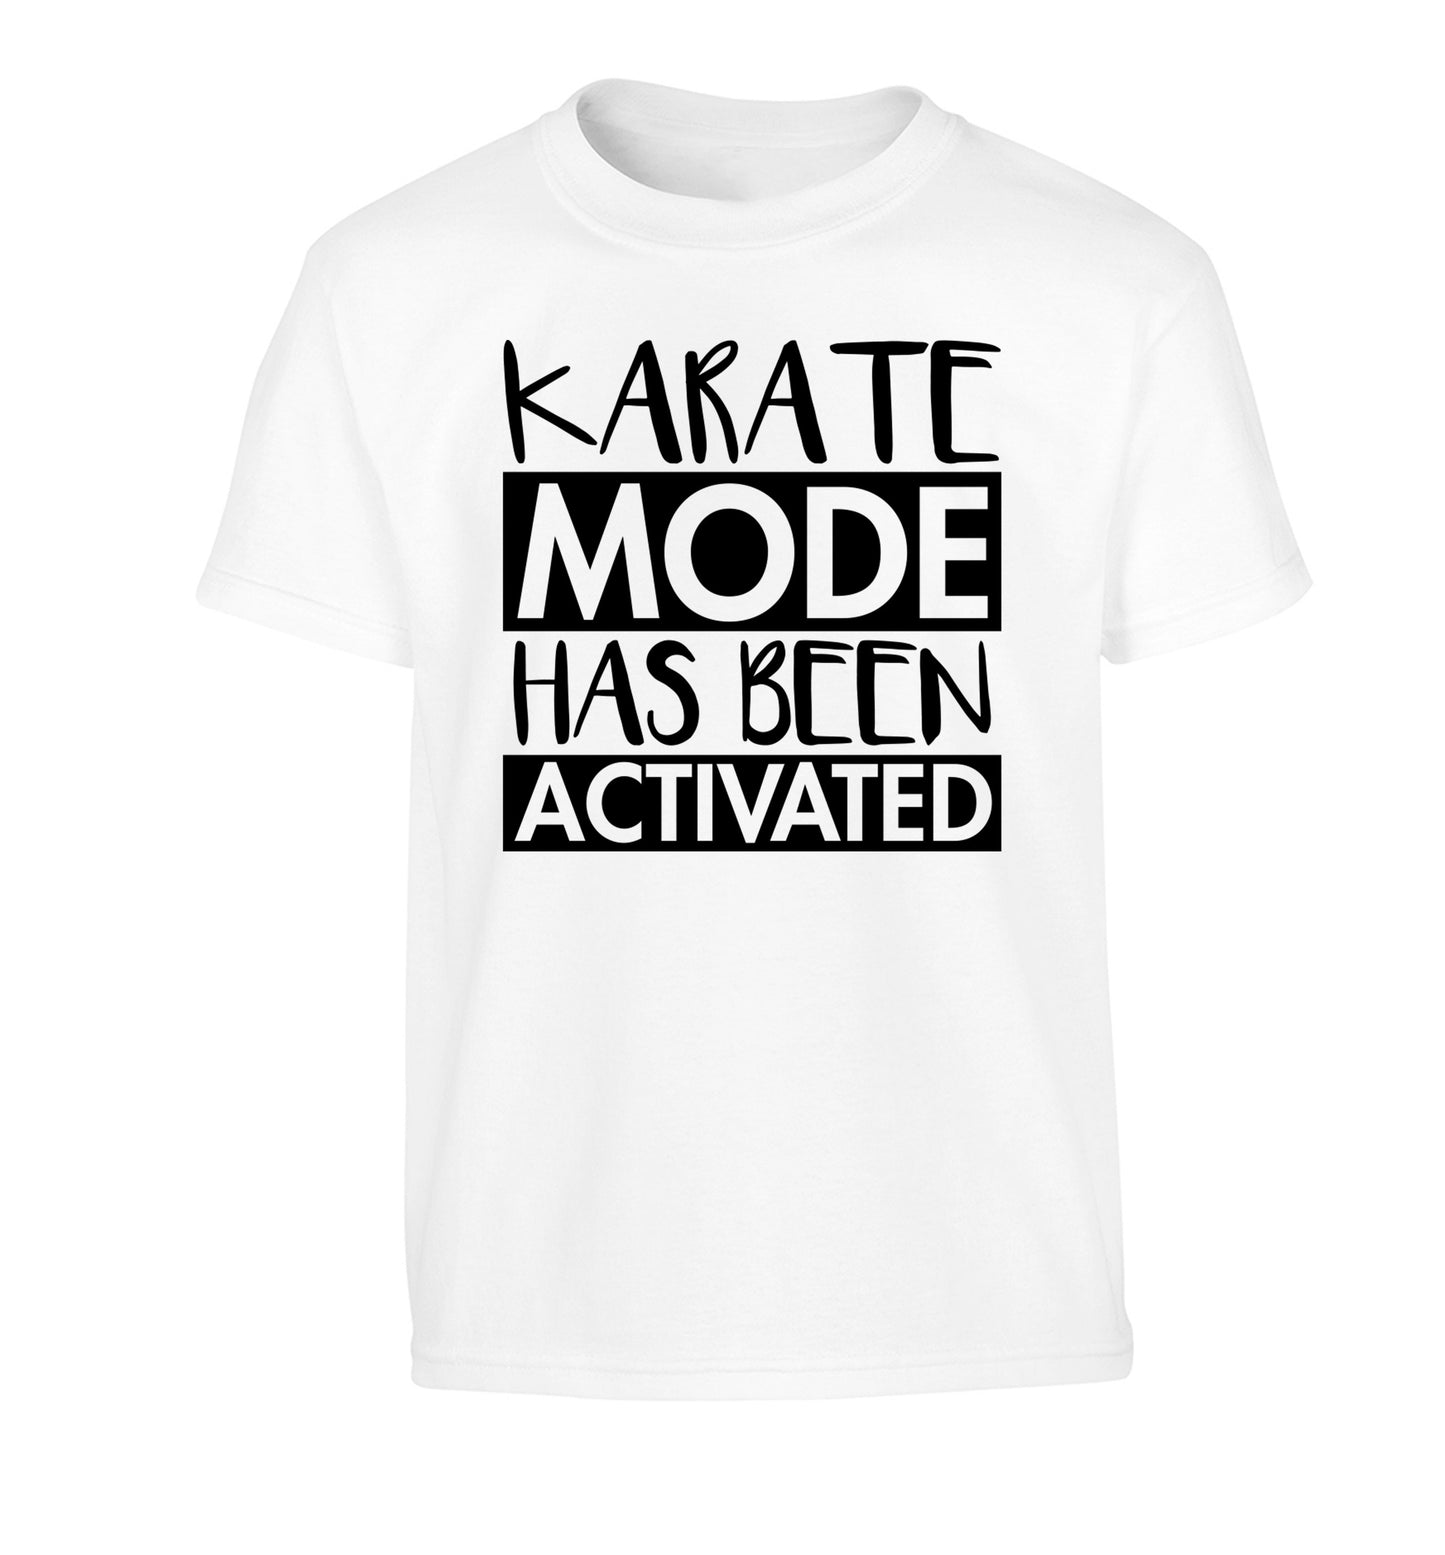 Karate mode activated Children's white Tshirt 12-14 Years